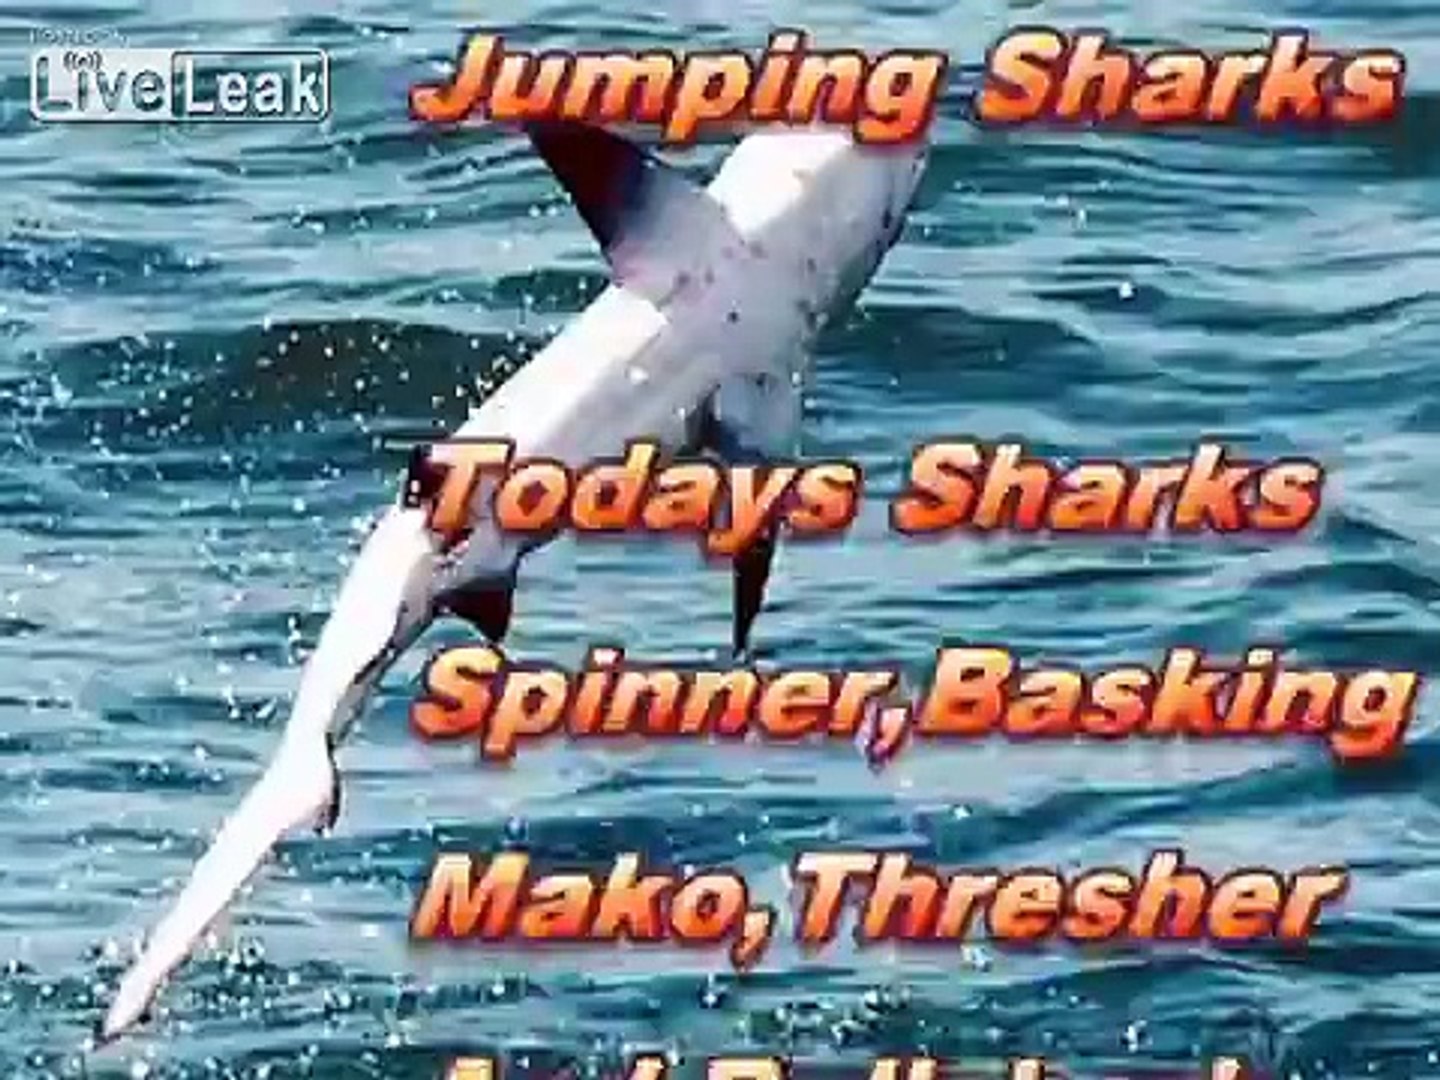 Jumping sharks